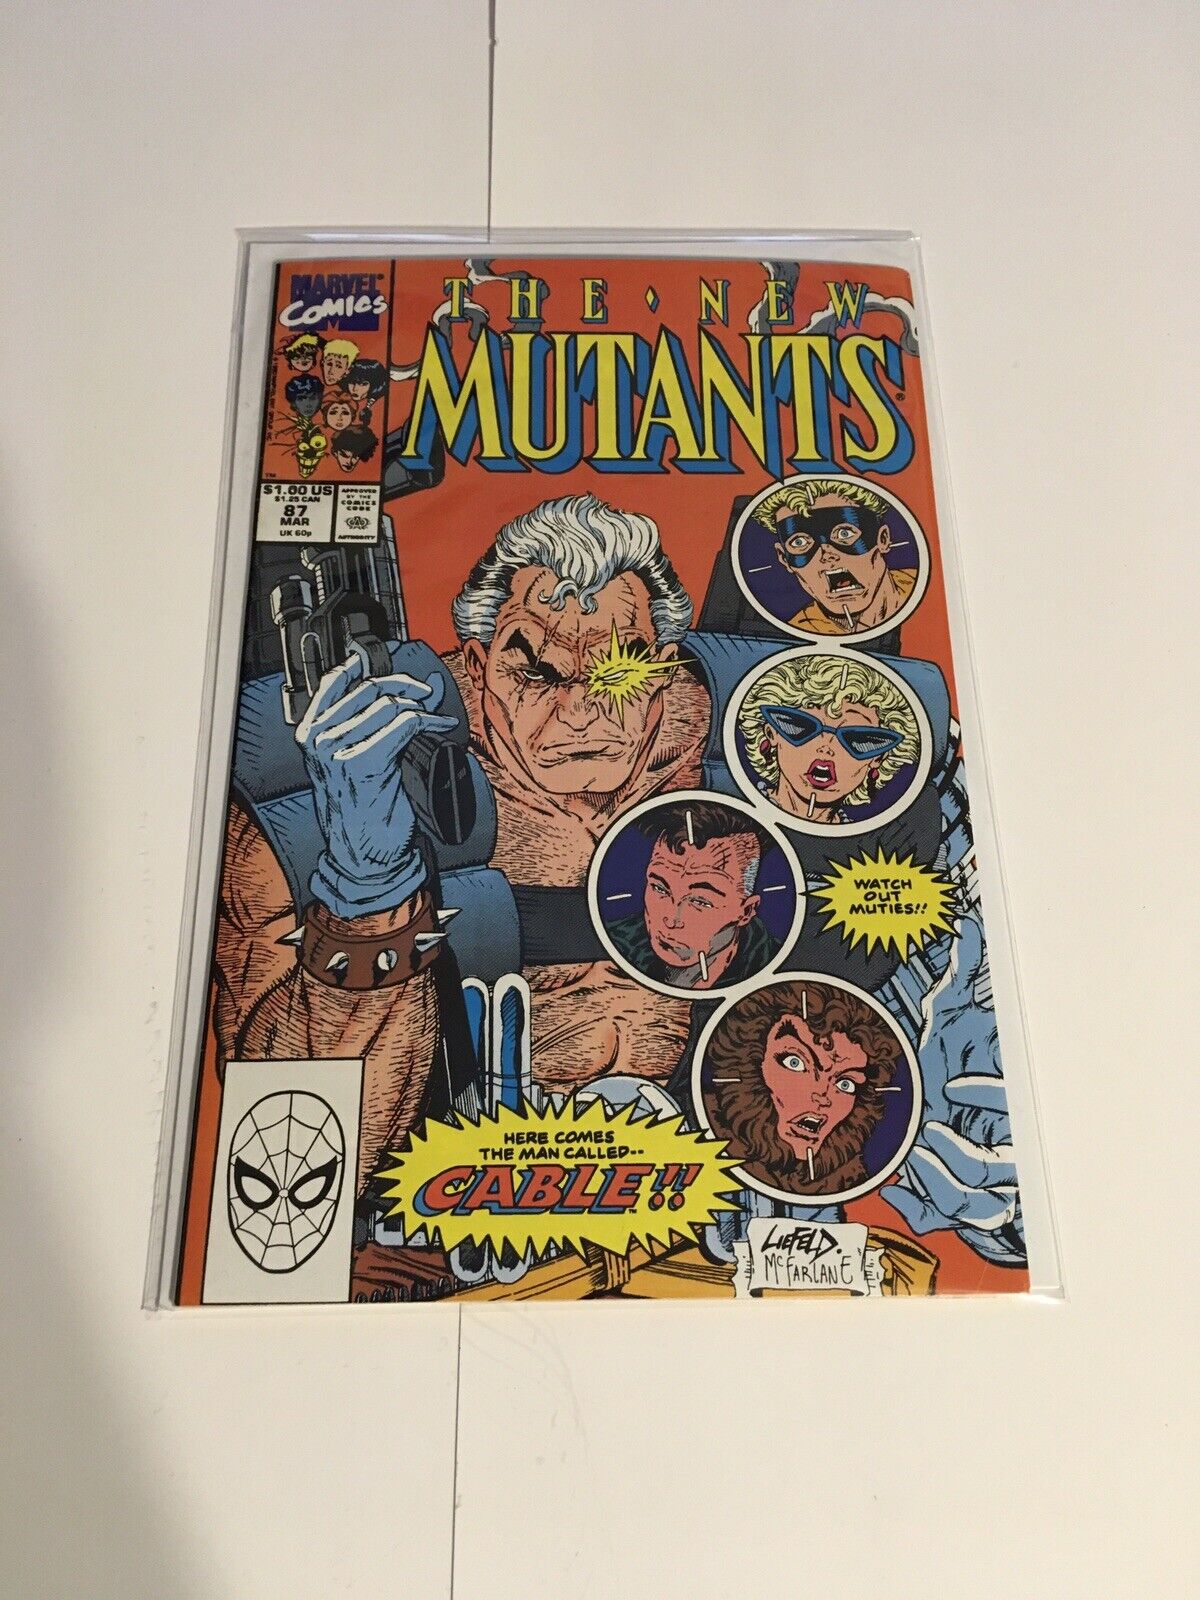 The New Mutants #87 (Marvel Comics March 1990)